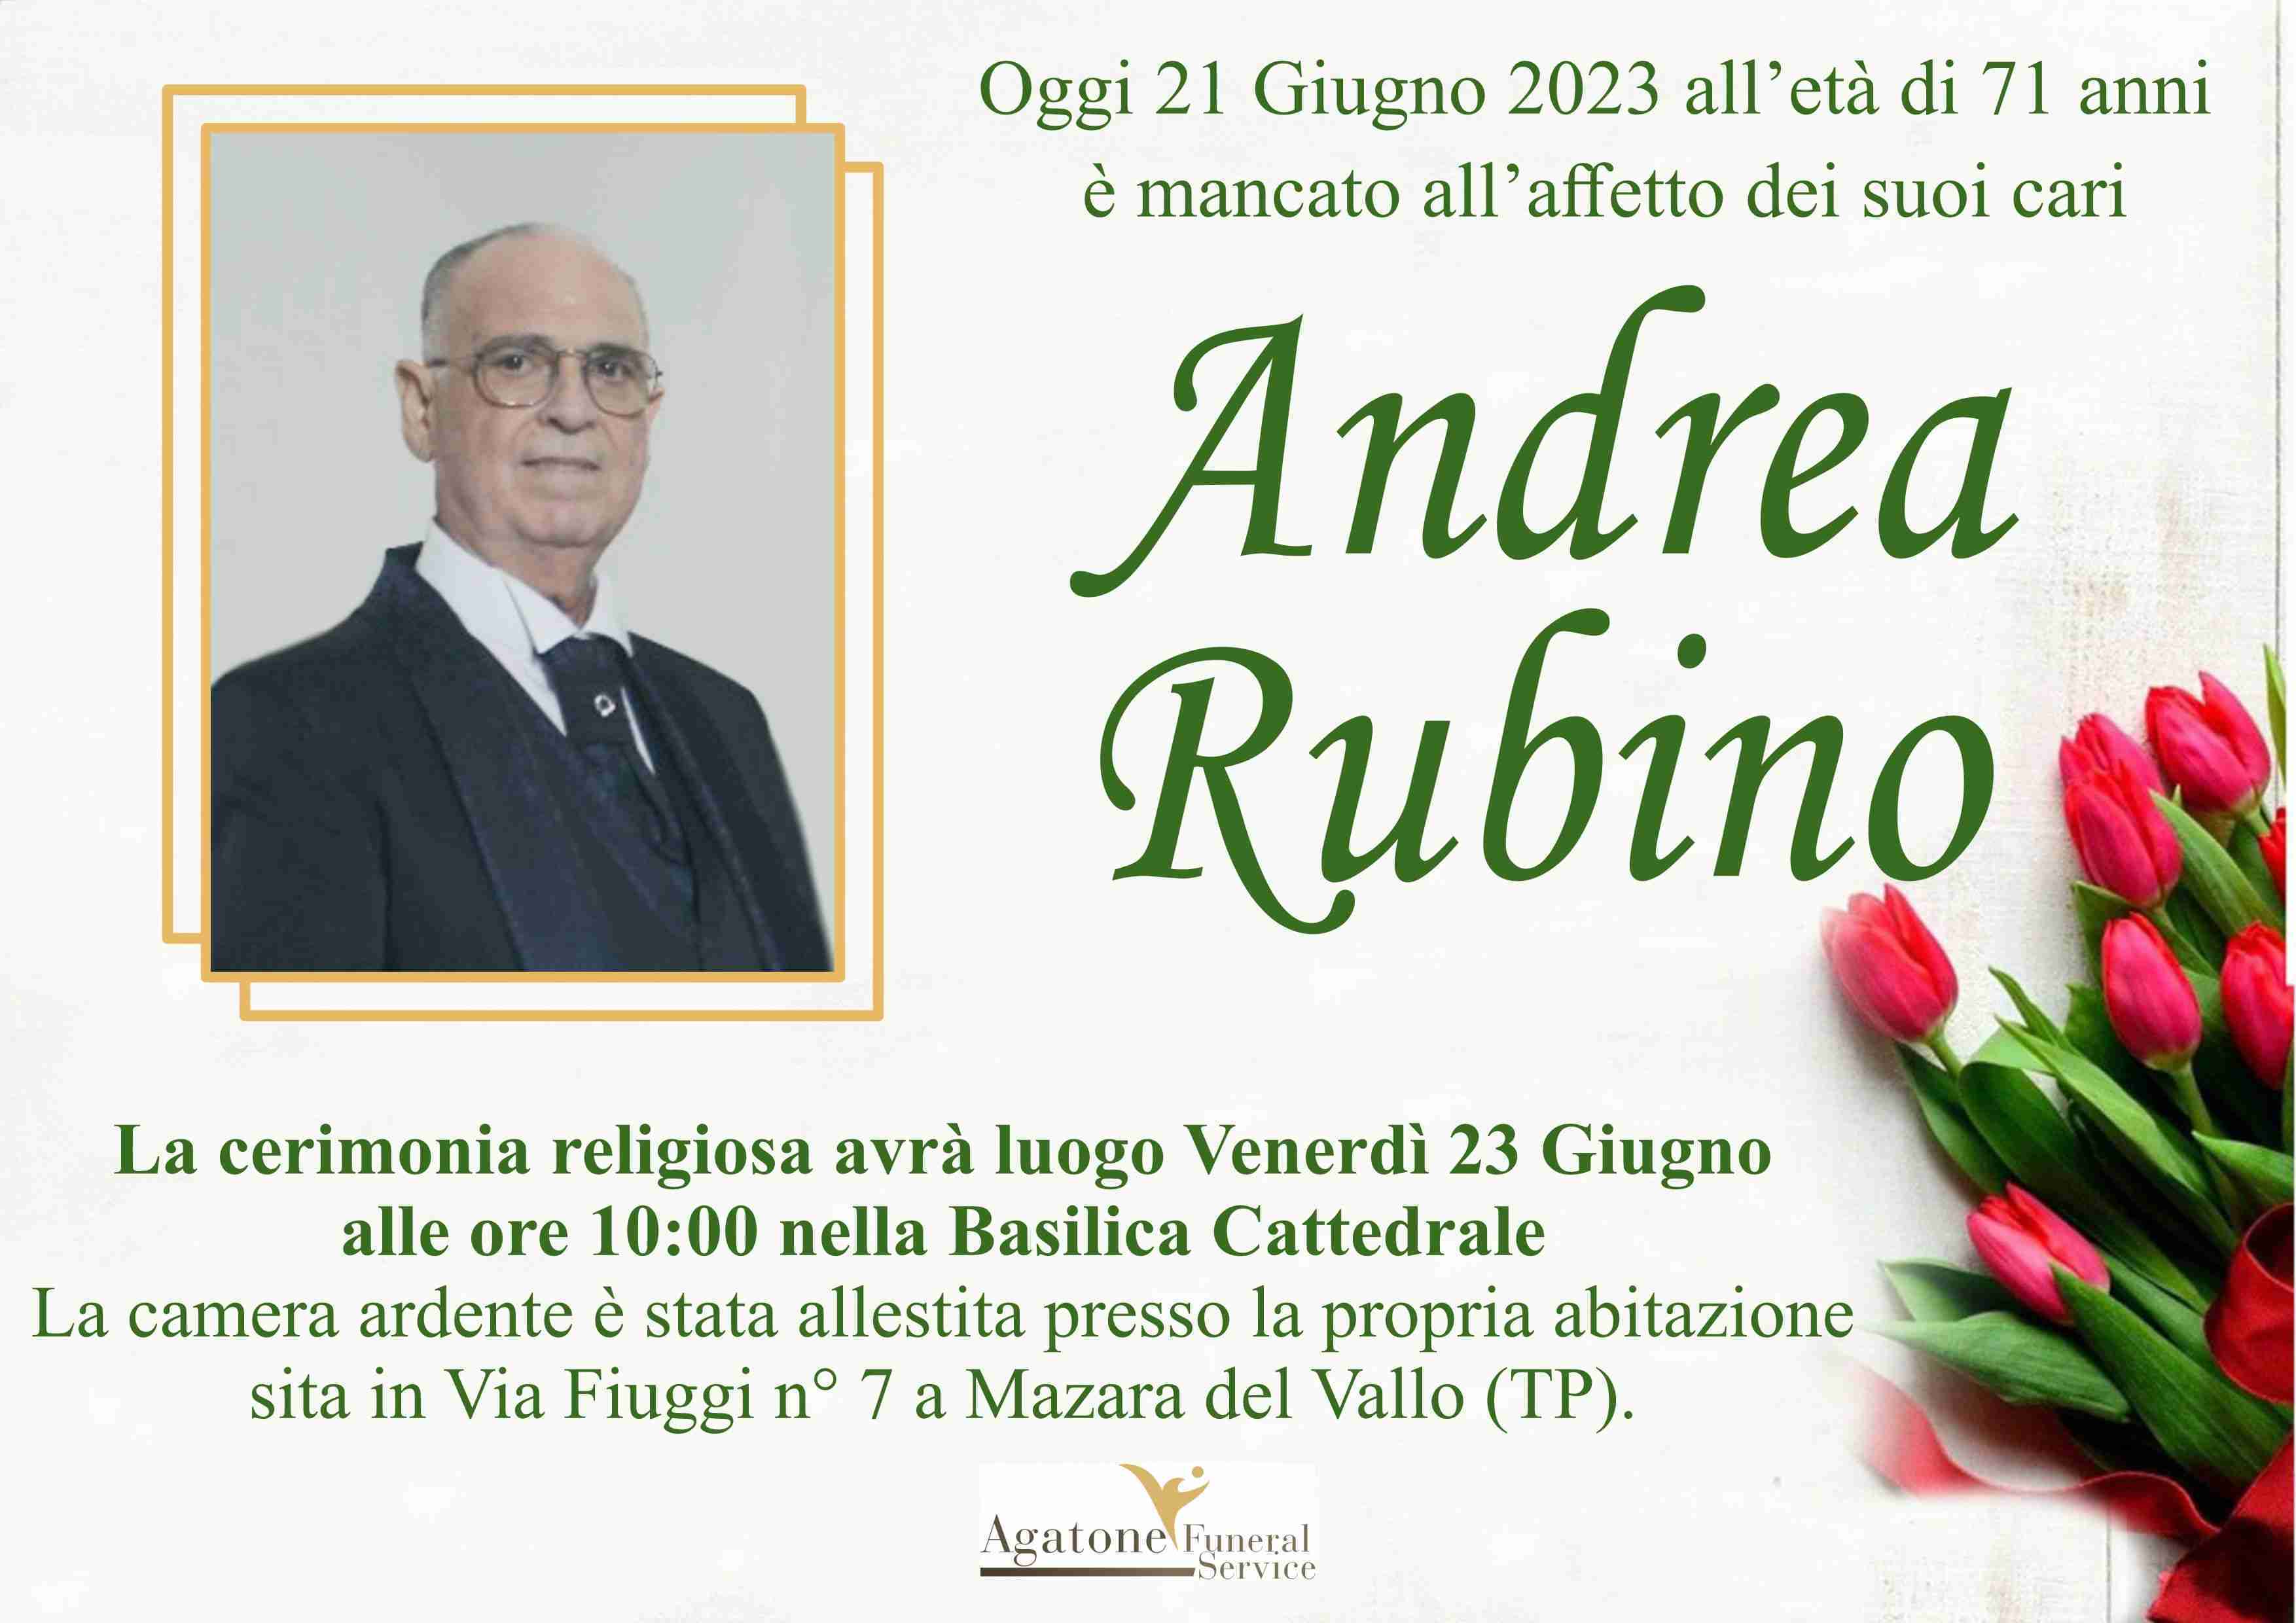 Andrea Rubino